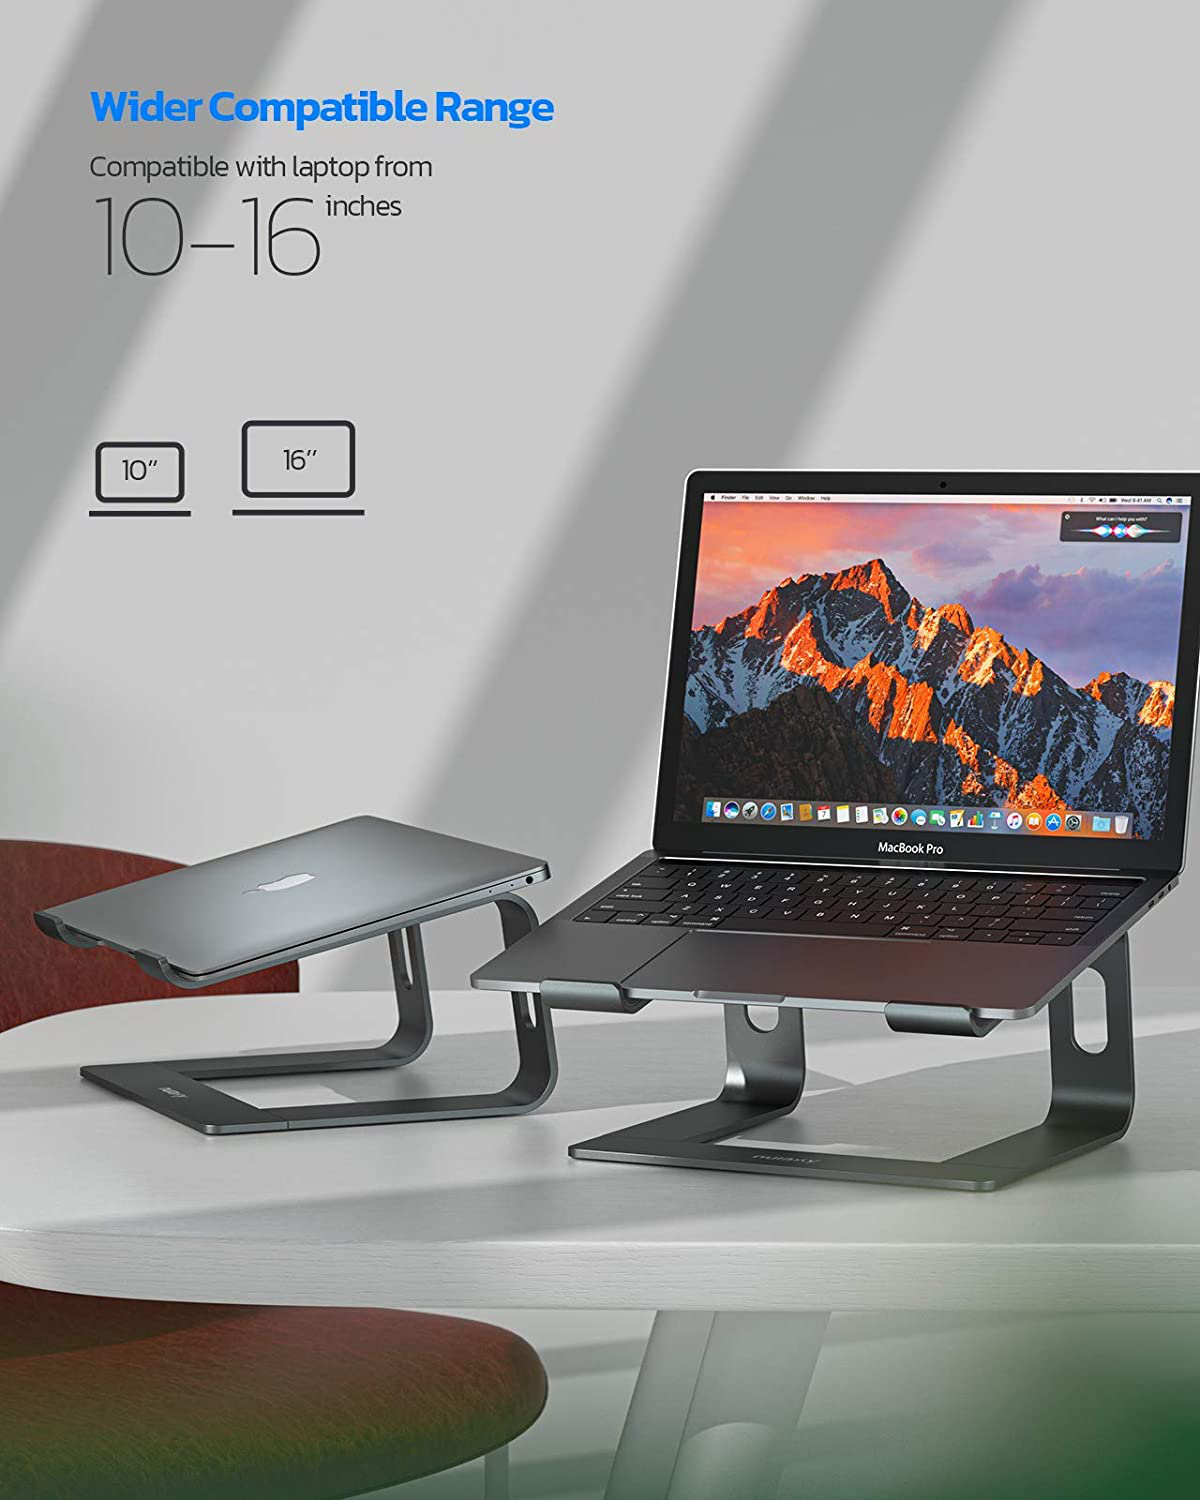 Ergonomic Aluminum Laptop Mount Computer Stand for Desk, Detachable Laptop Riser Notebook Stand Compatible with MacBook Air Pro, Dell XPS, More 10-16" Laptops